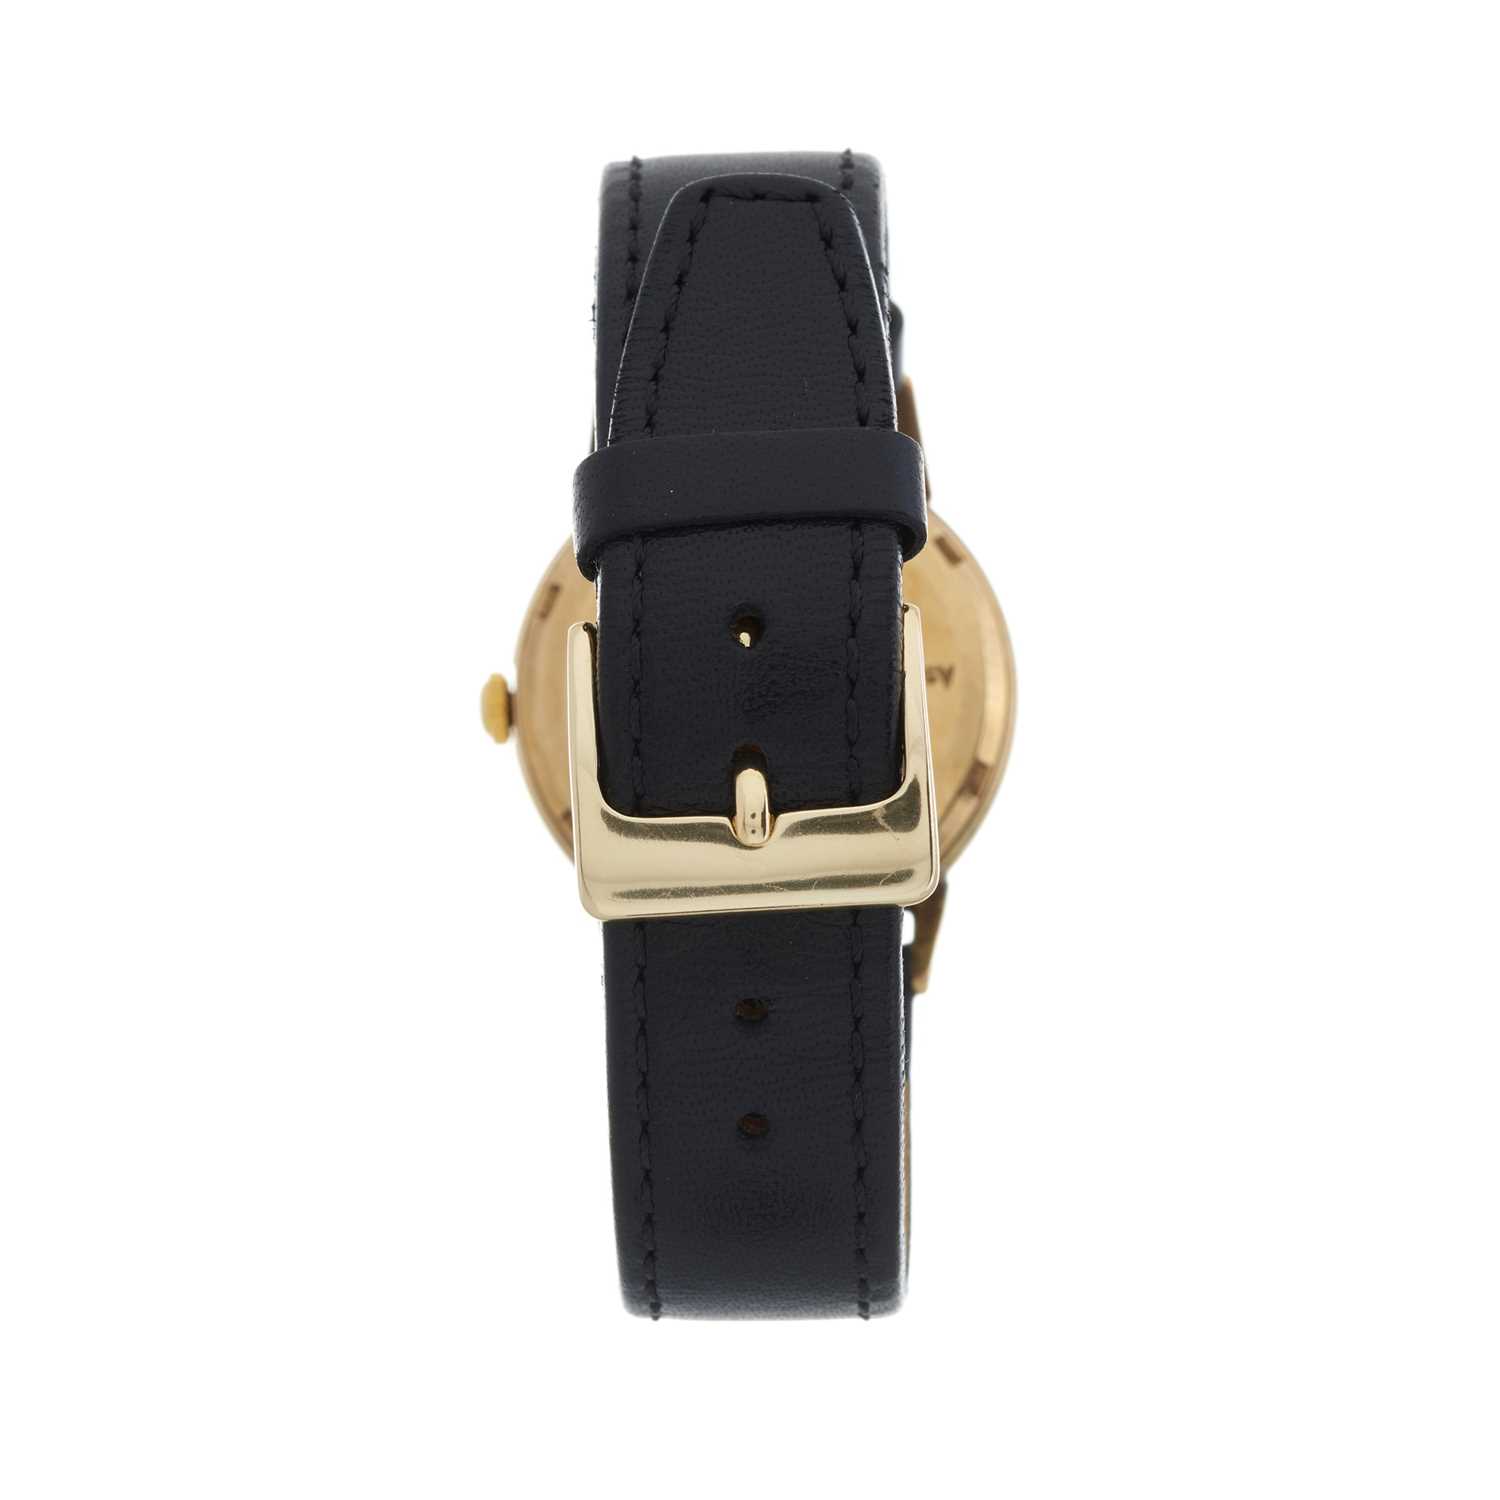 Rolex, a 9ct gold Precision wrist watch - Image 2 of 3